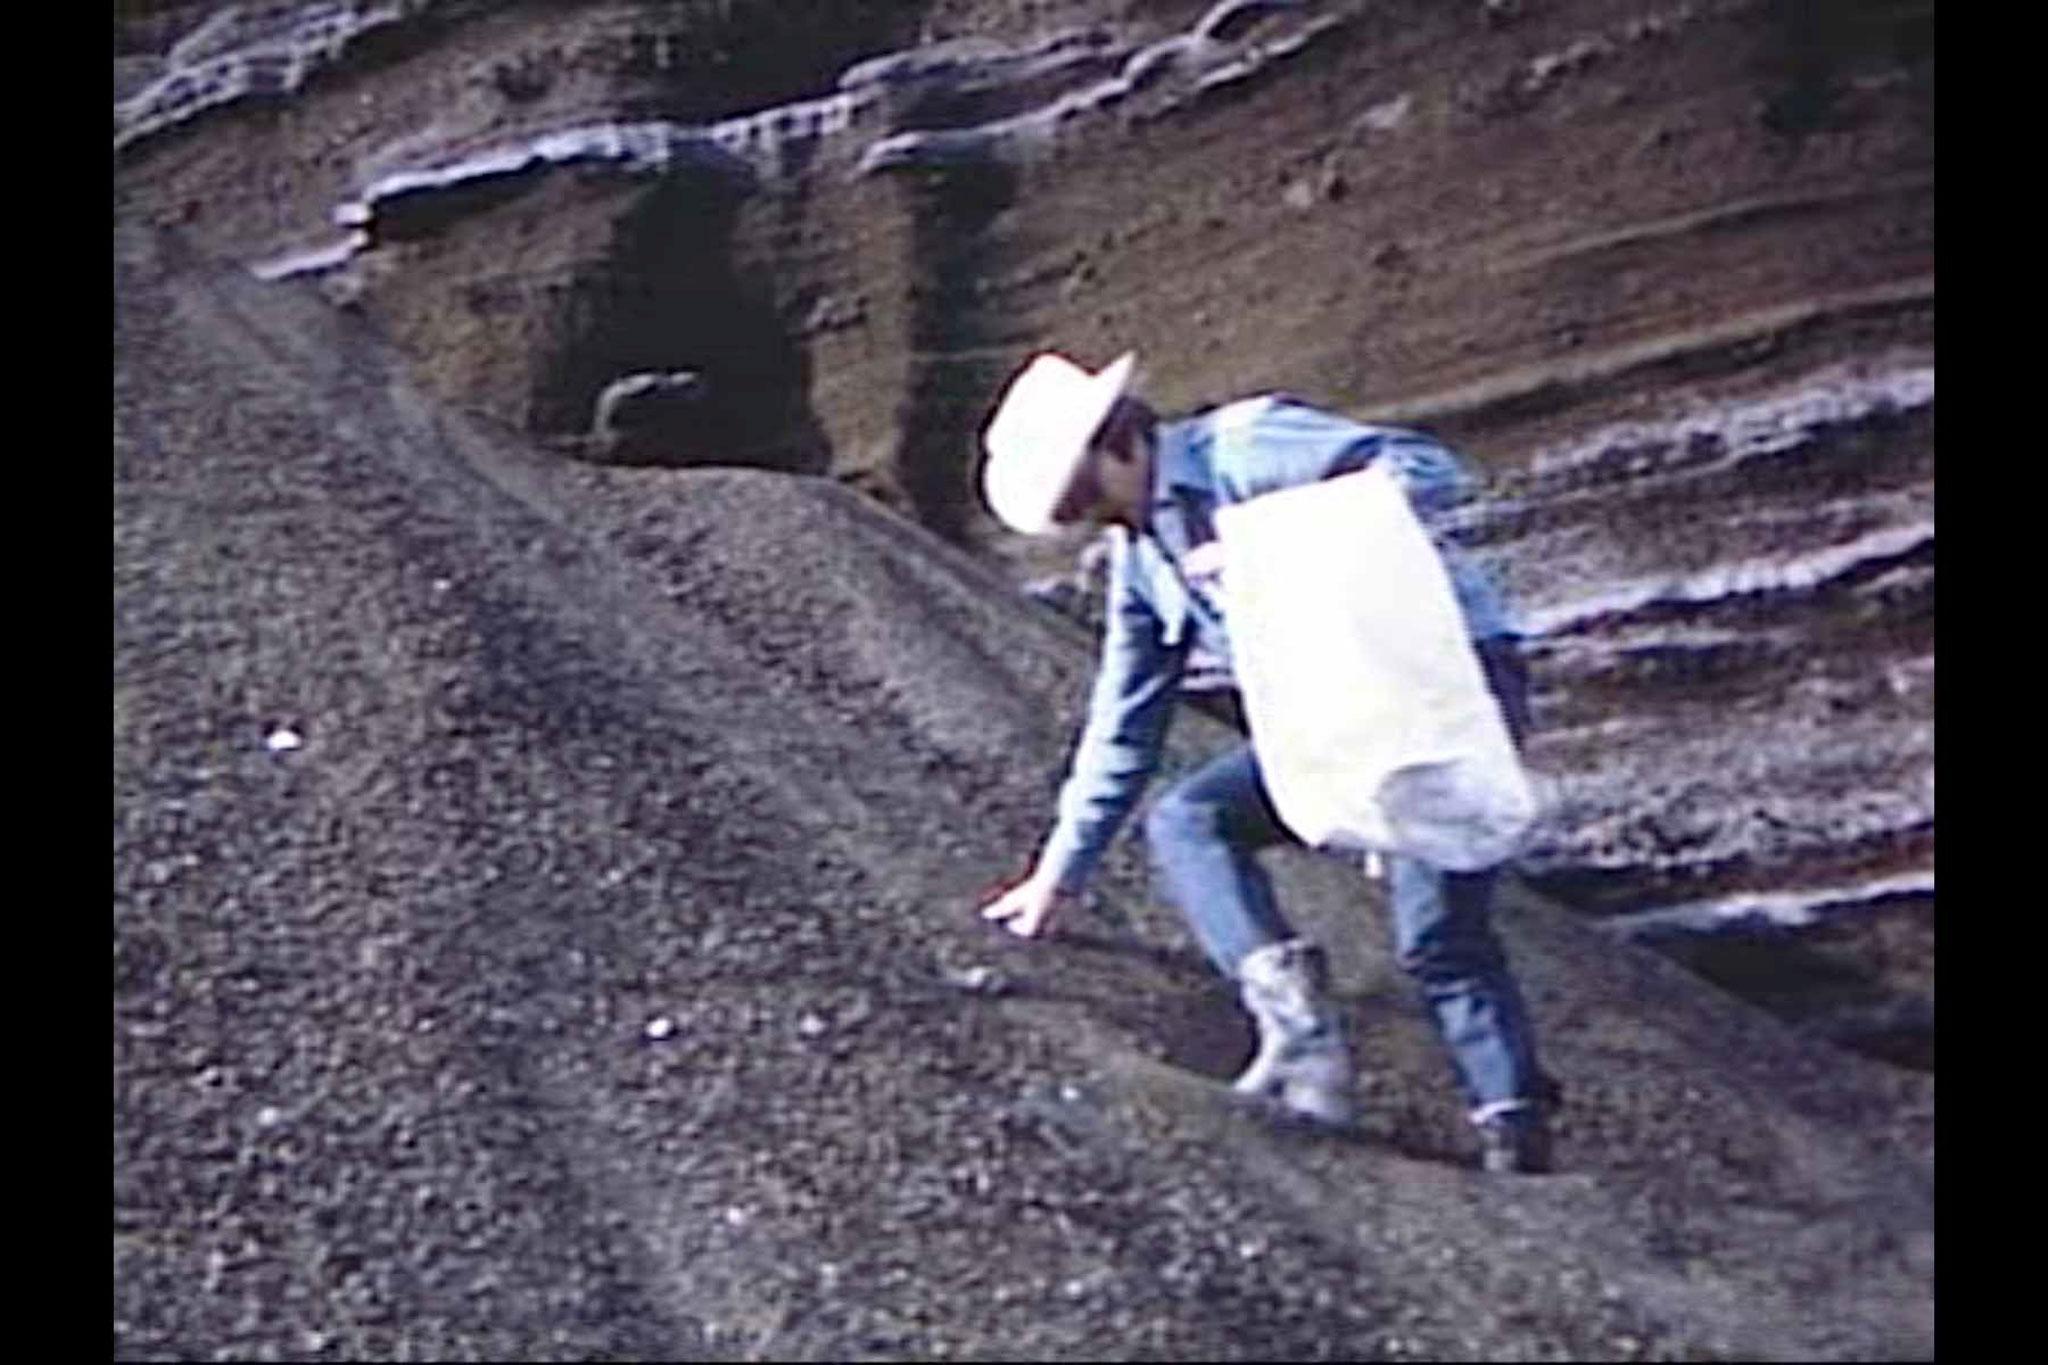 A man wearing a cowboy hat descending a steep slope of gravel